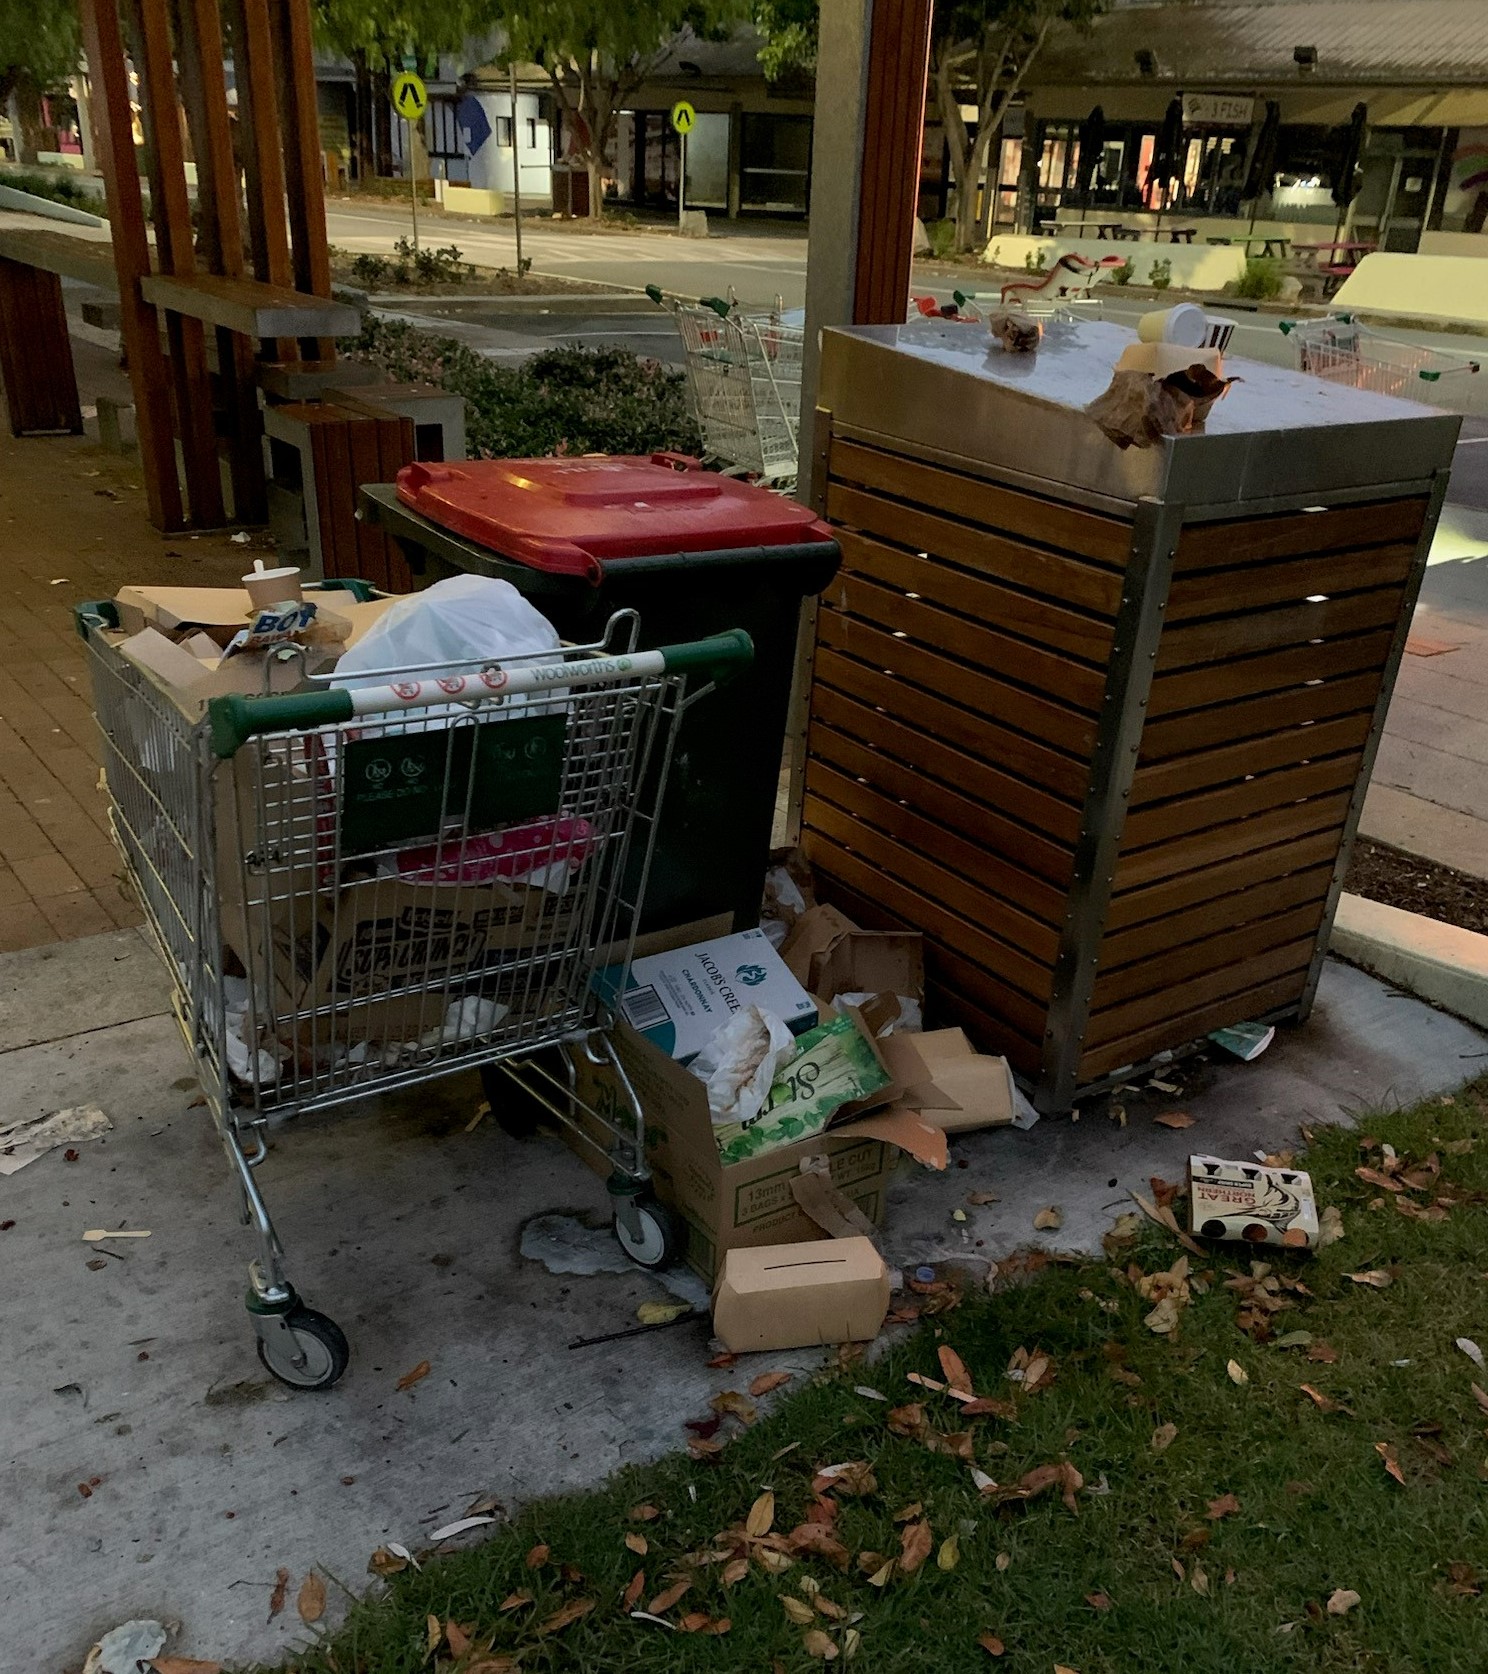 council street bins overflowing